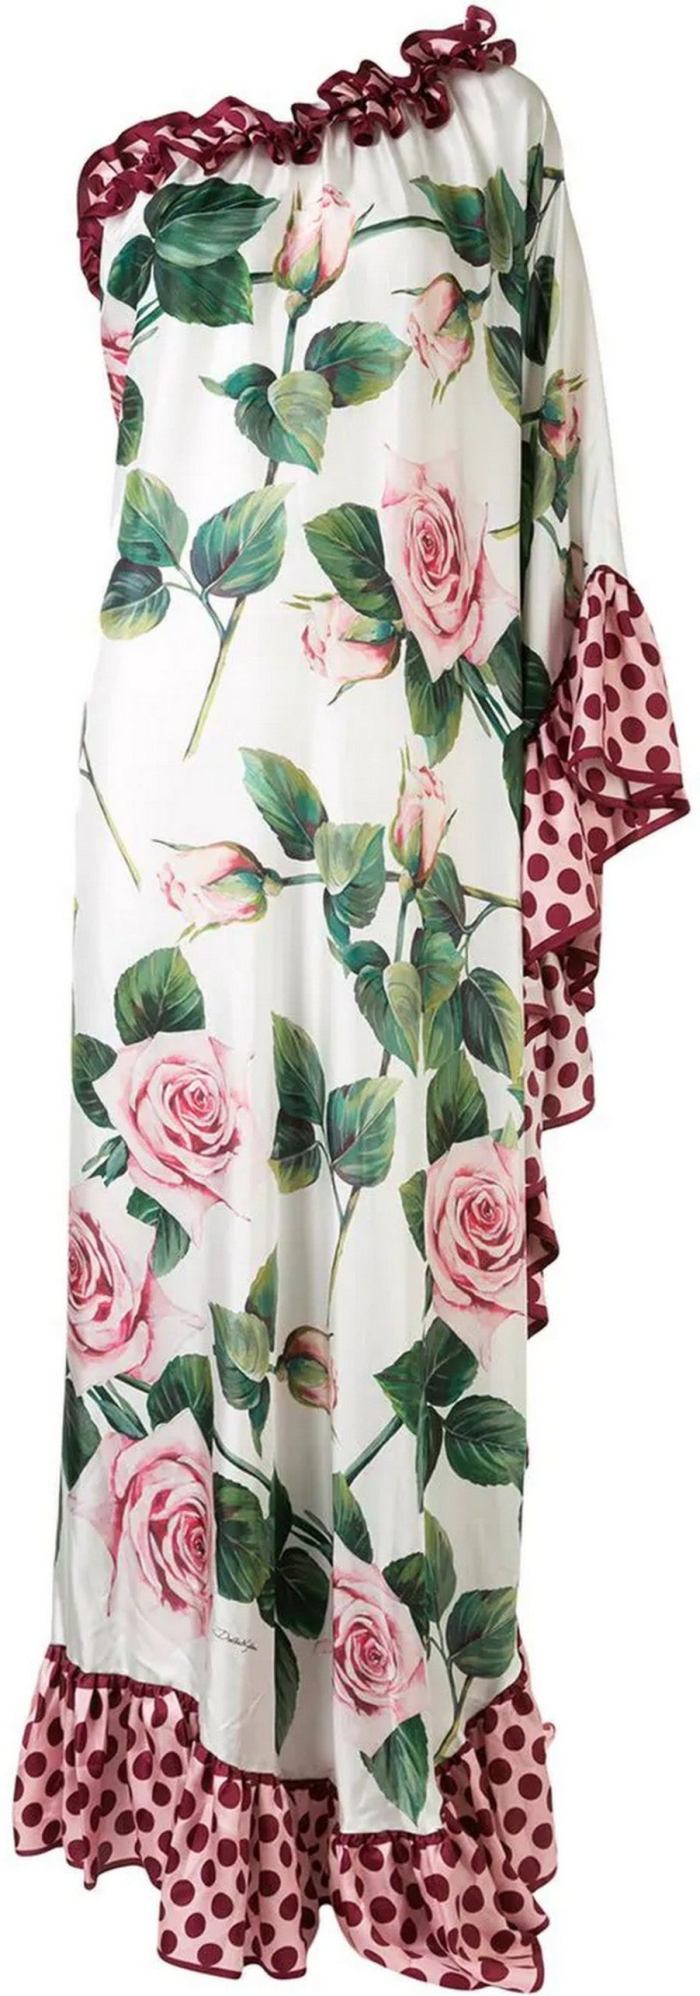 Tropical Rose Print Maxi Dress DESIGNER INSPIRED FASHIONS